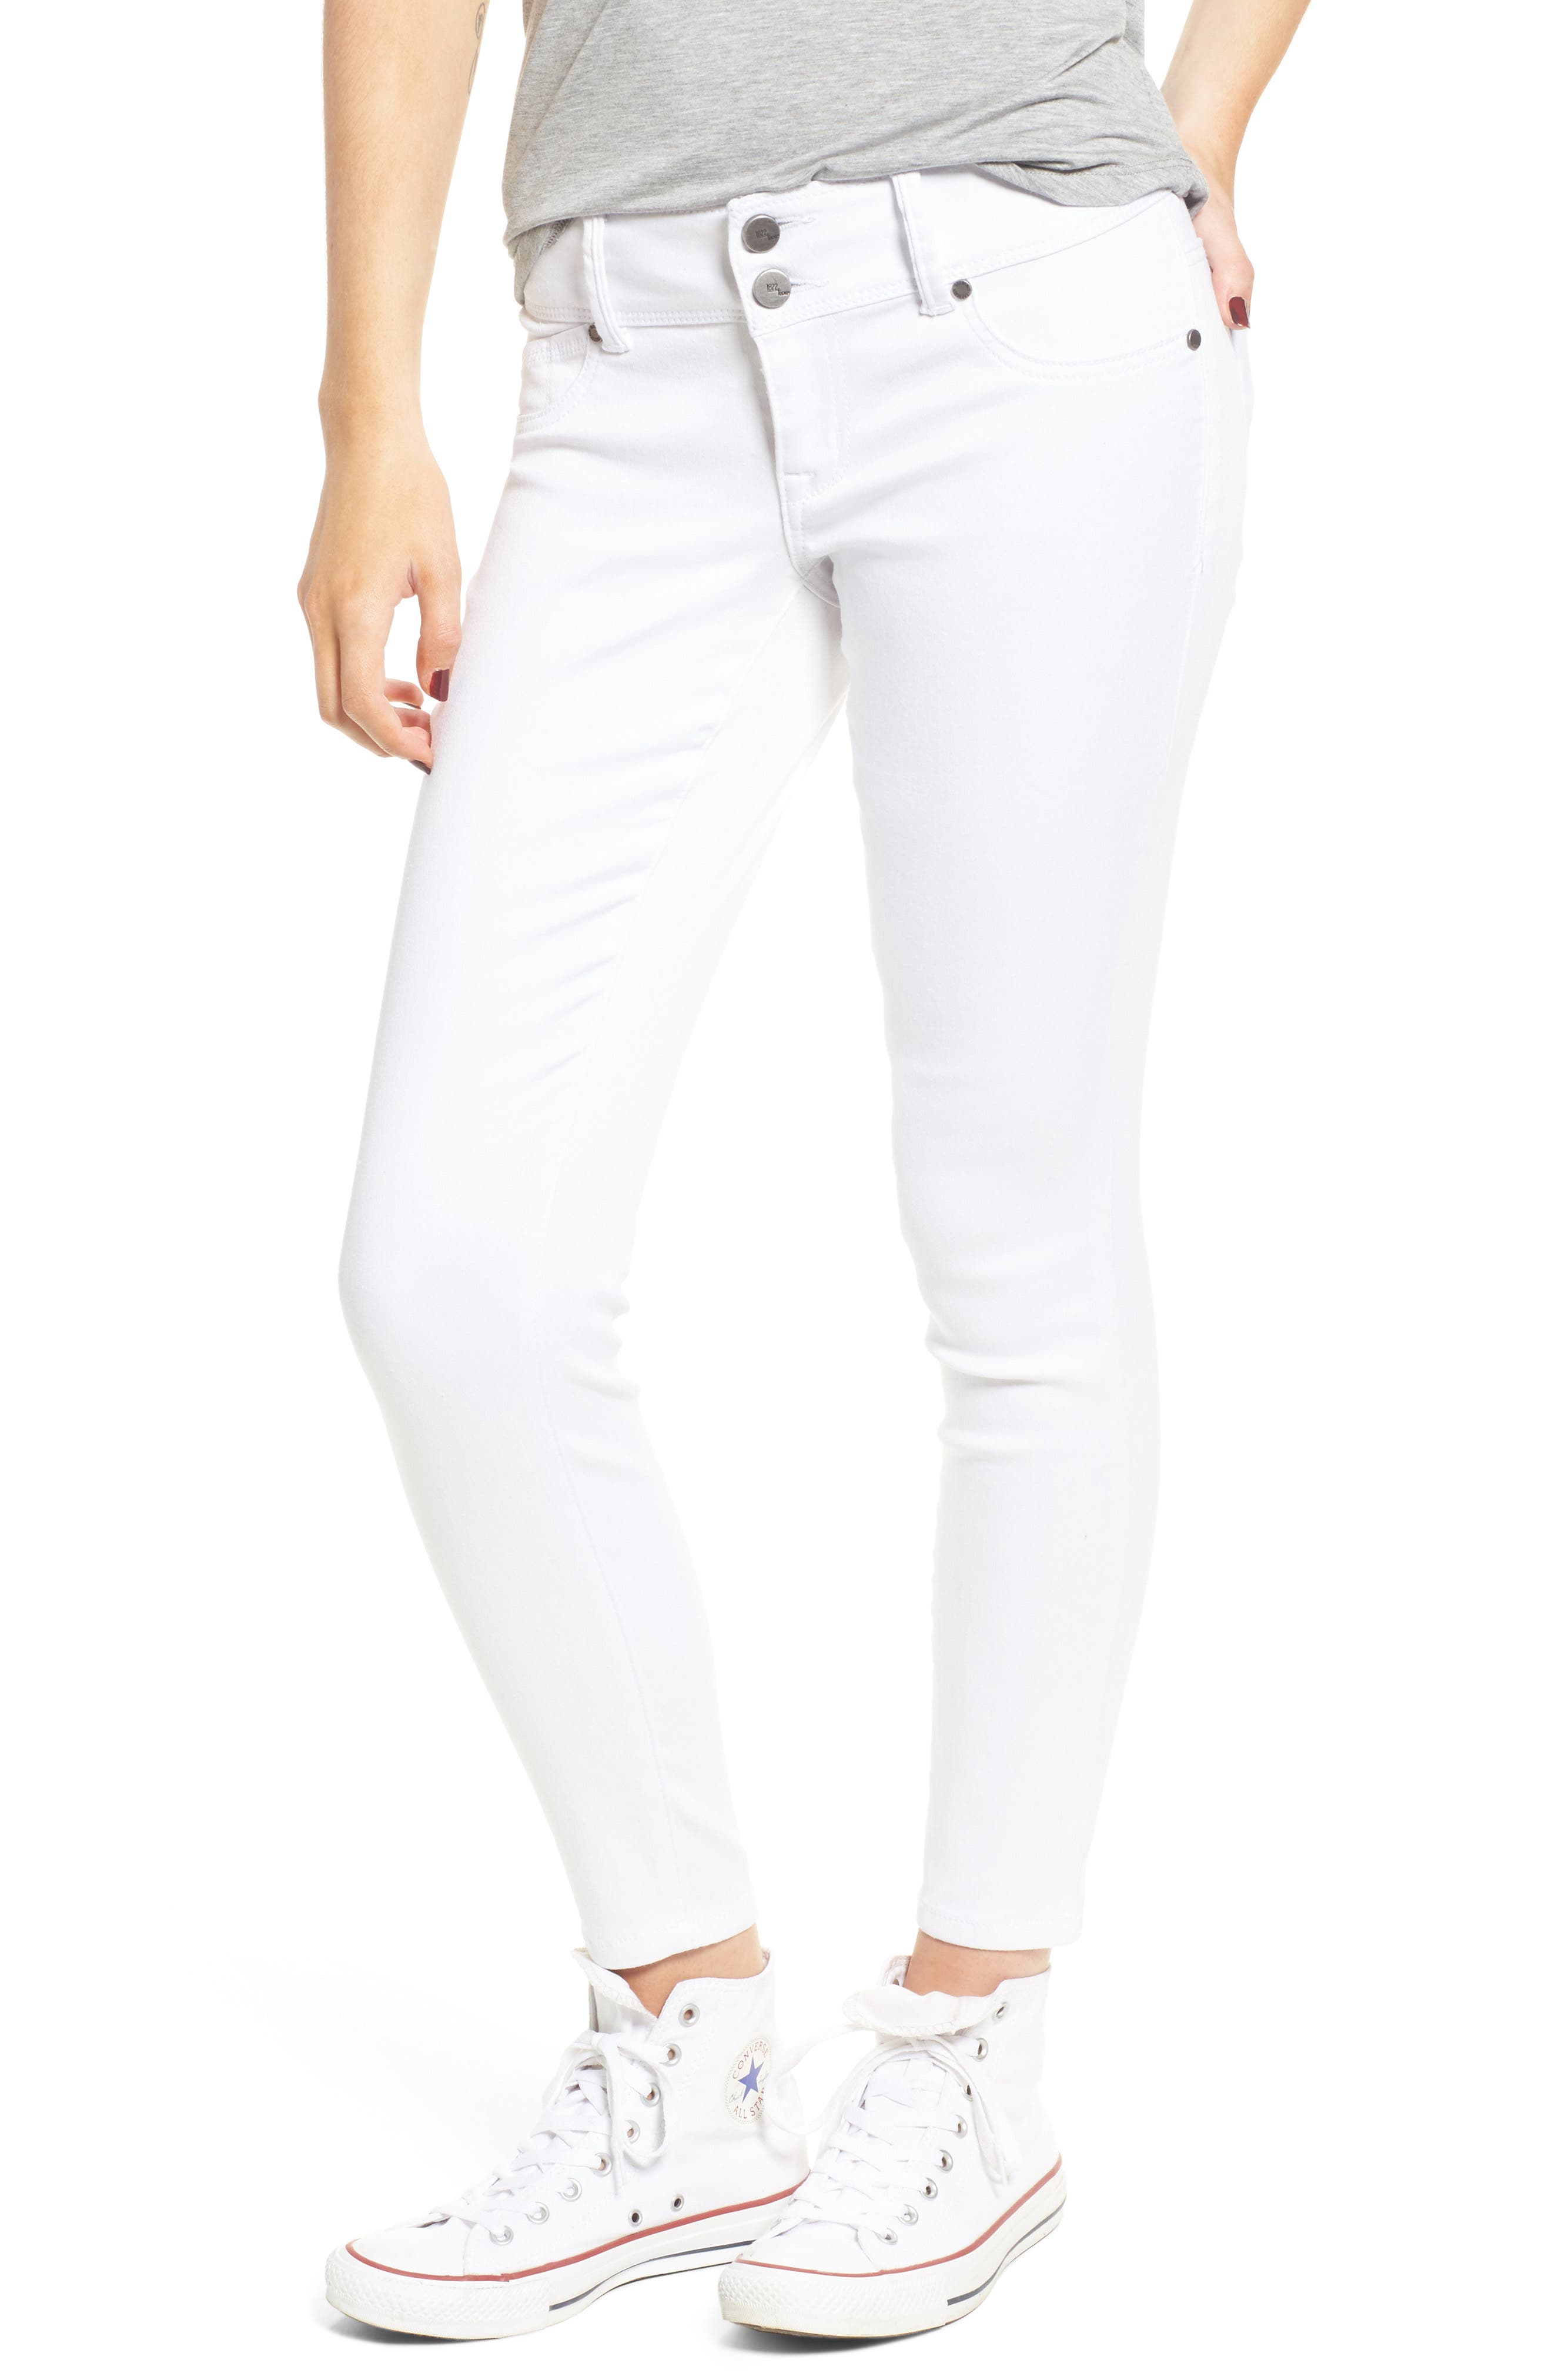 1822 denim white jeans